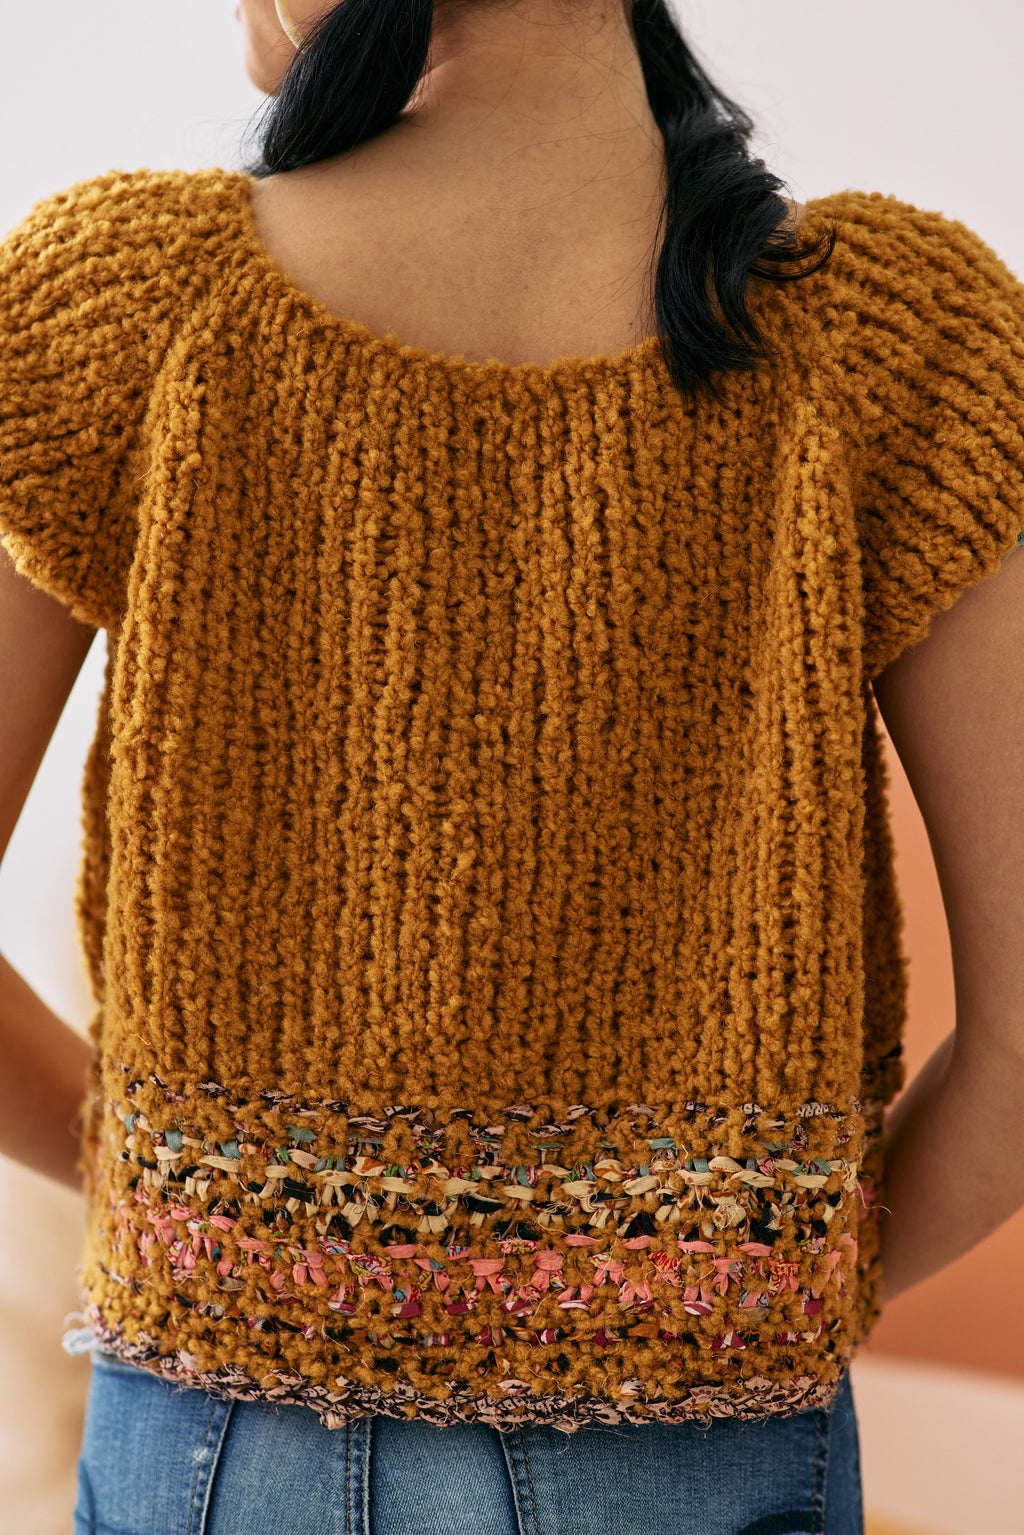 Drops yarn sale – Polly Knitter